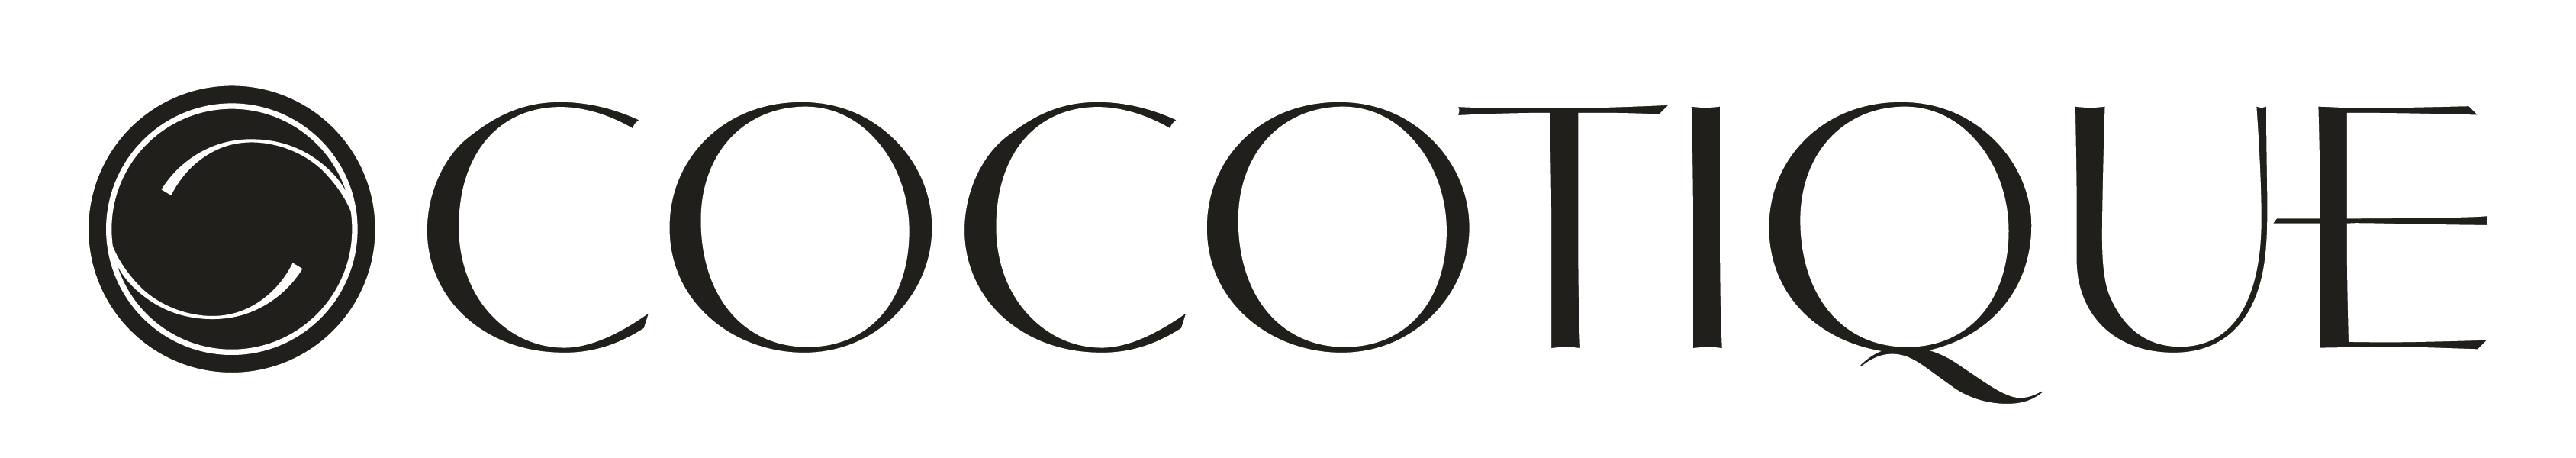 cocotique-logo-11.25x2-hires